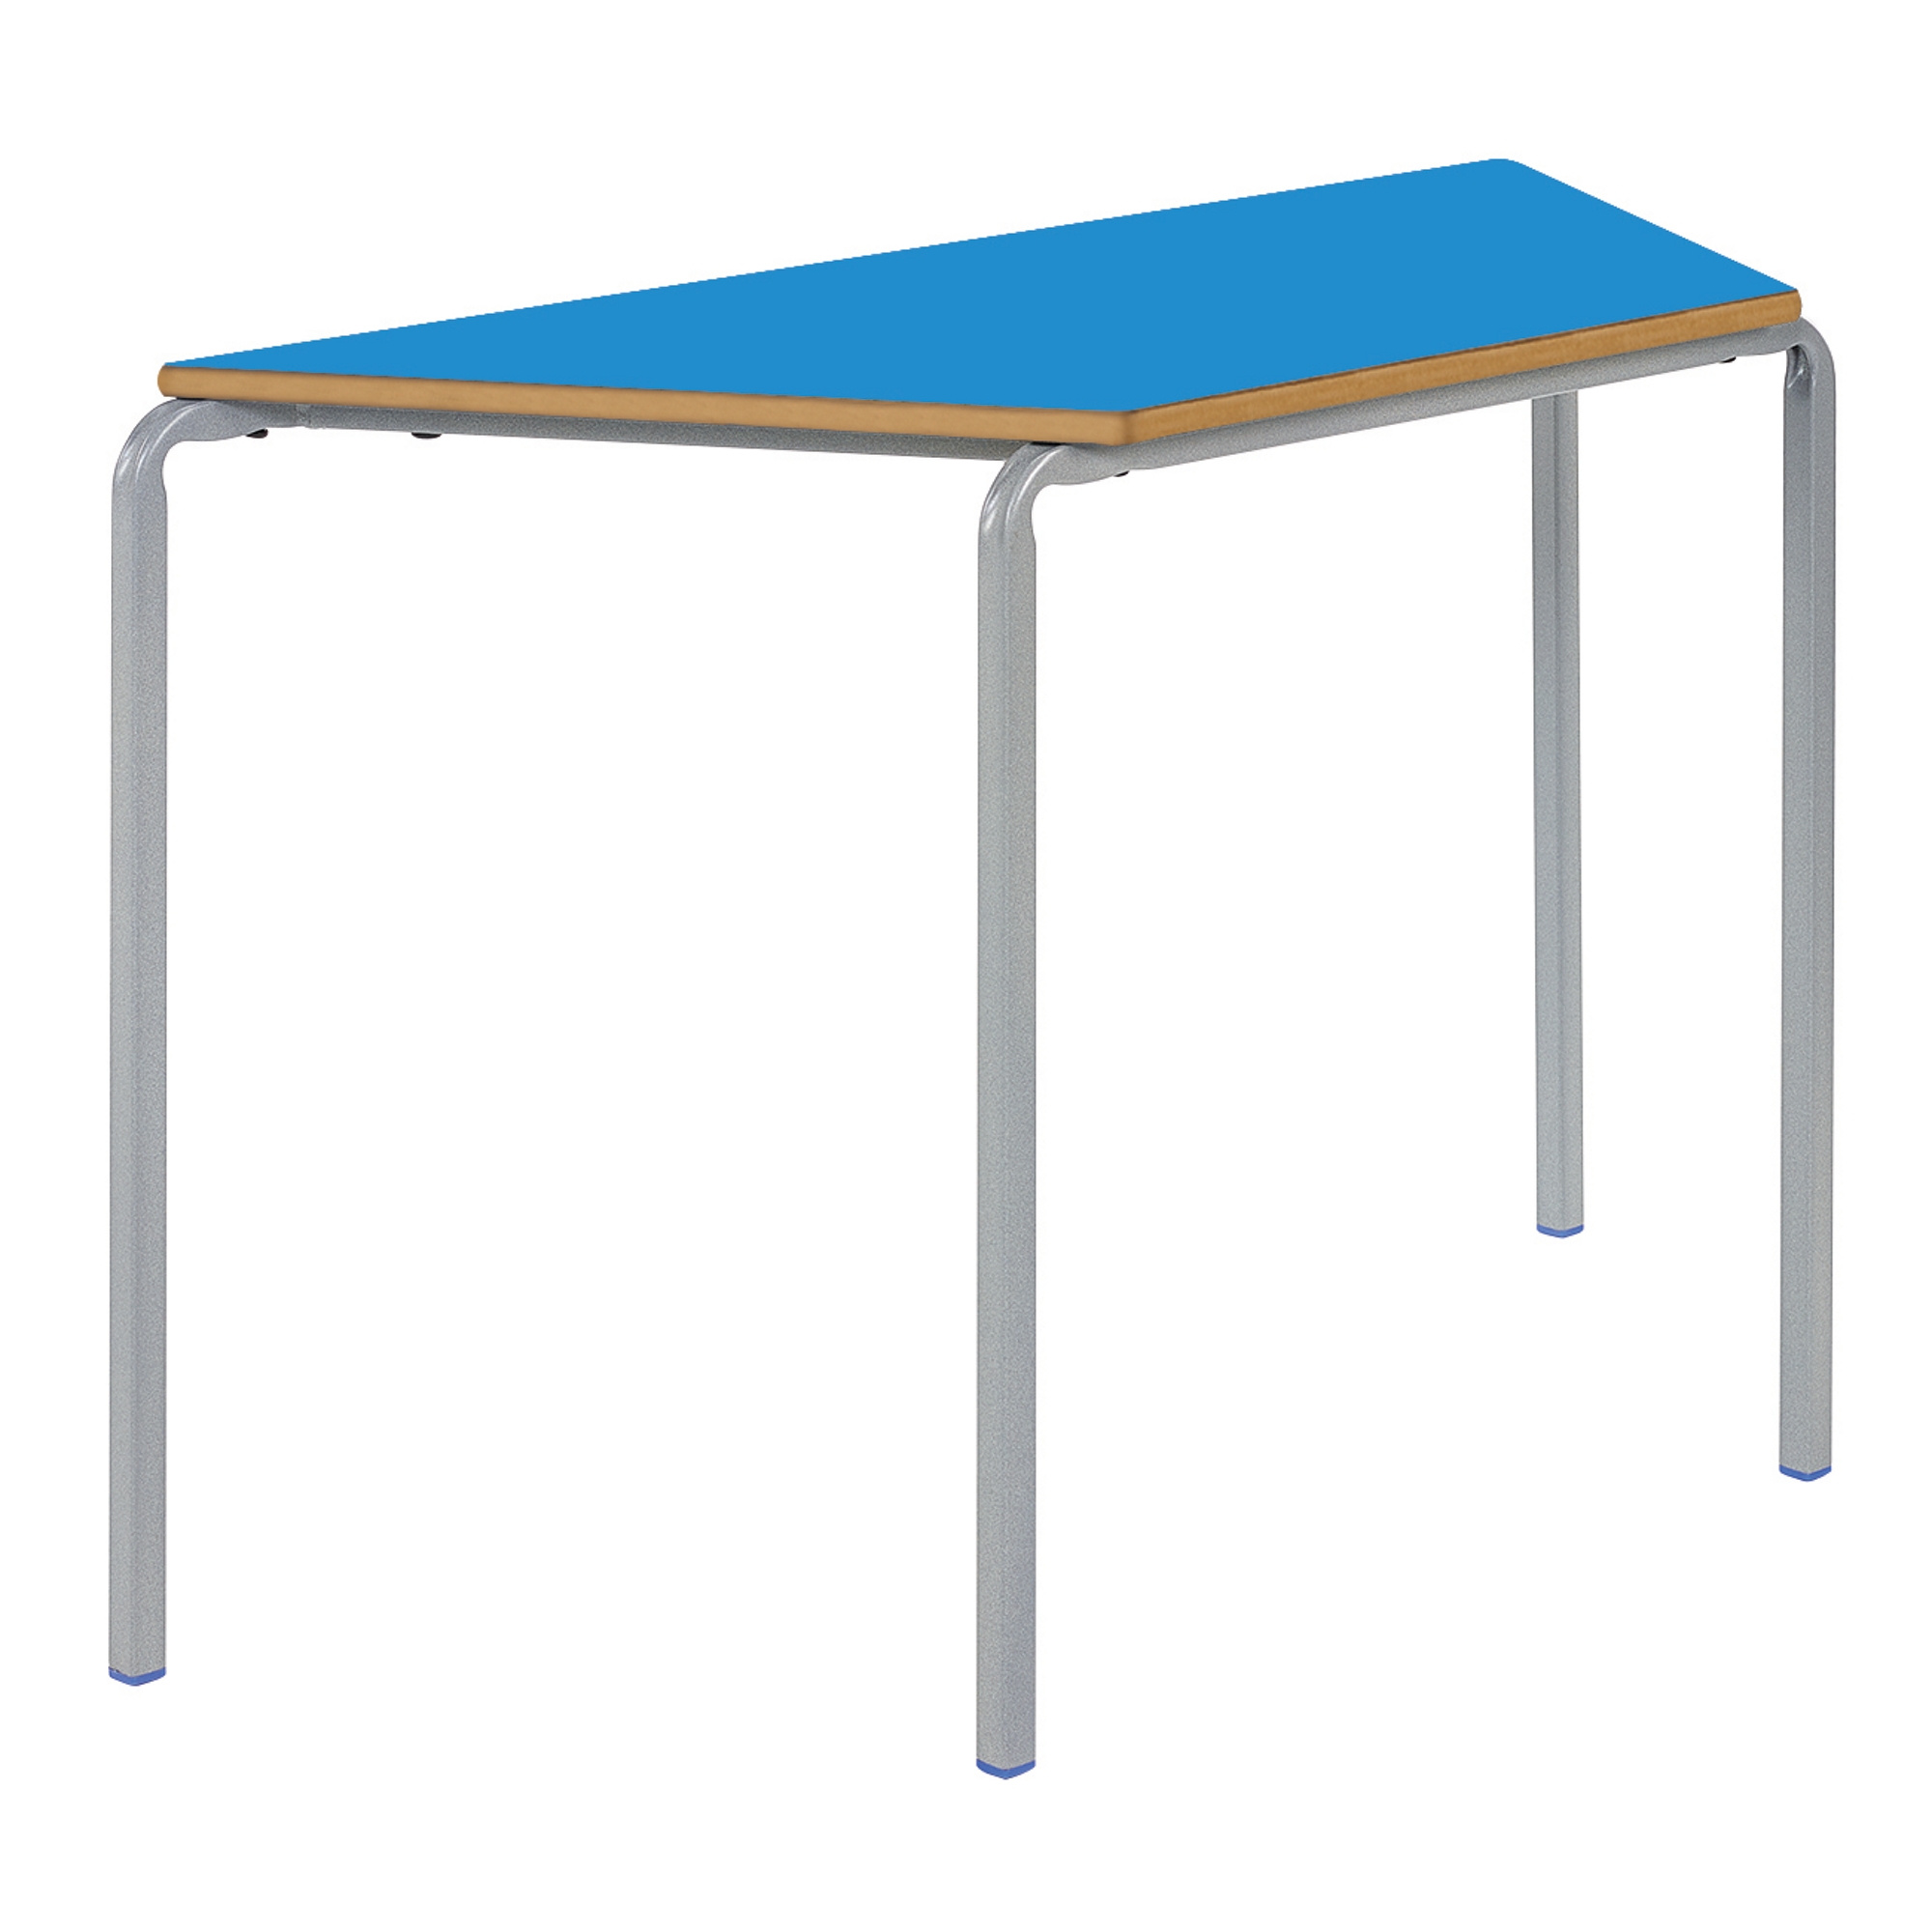 Classmates Trapezoidal Crushed Bent Classroom Table - 1100 x 550 x 640mm - Blue